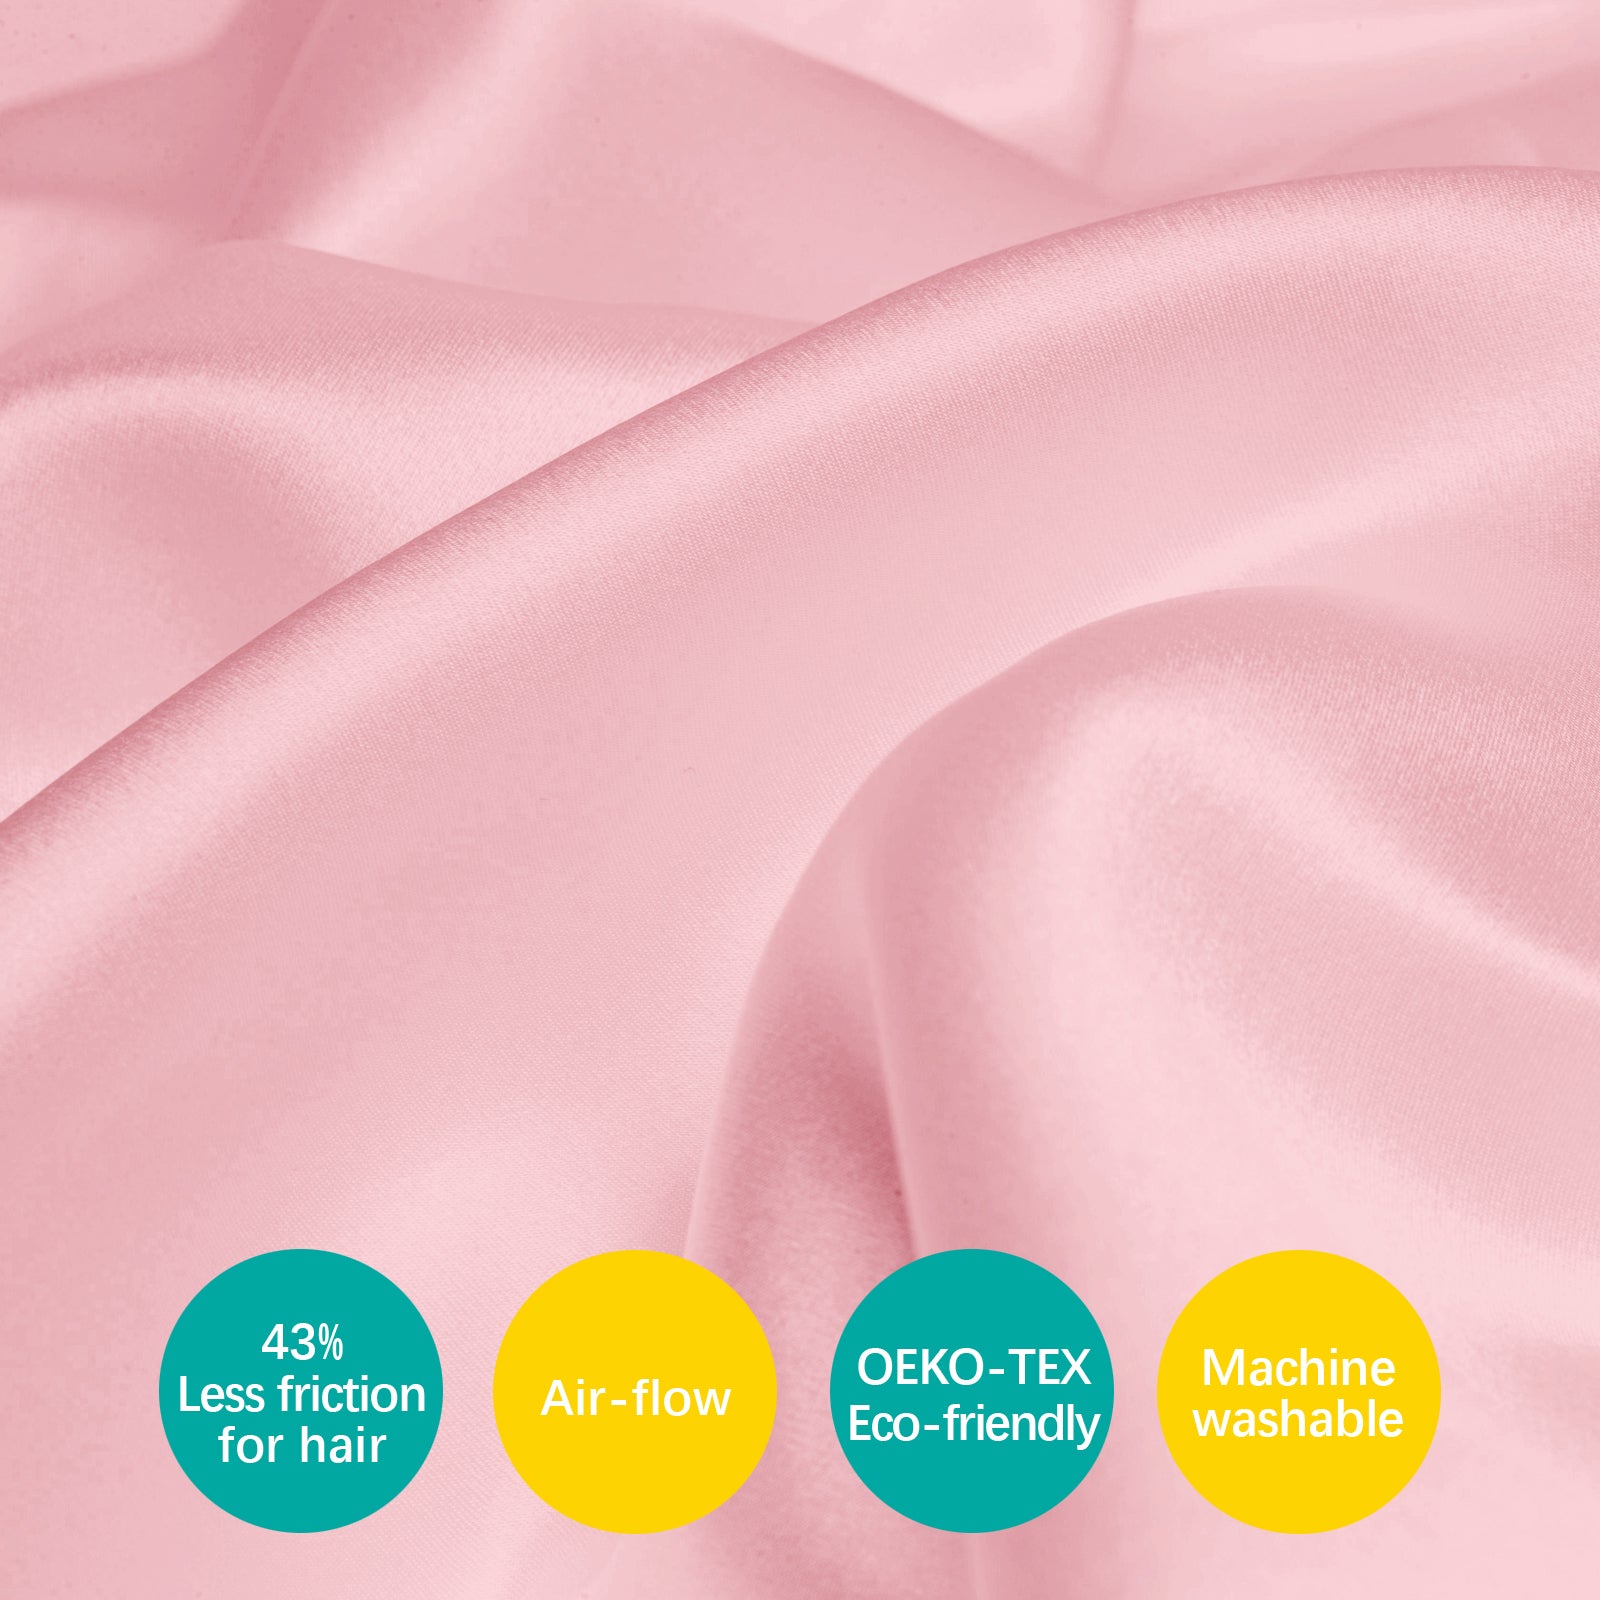 Toddler Pillowcase- 2 pack, Silky Soft Satin, Envelope Style, Pink - Biloban Online Store